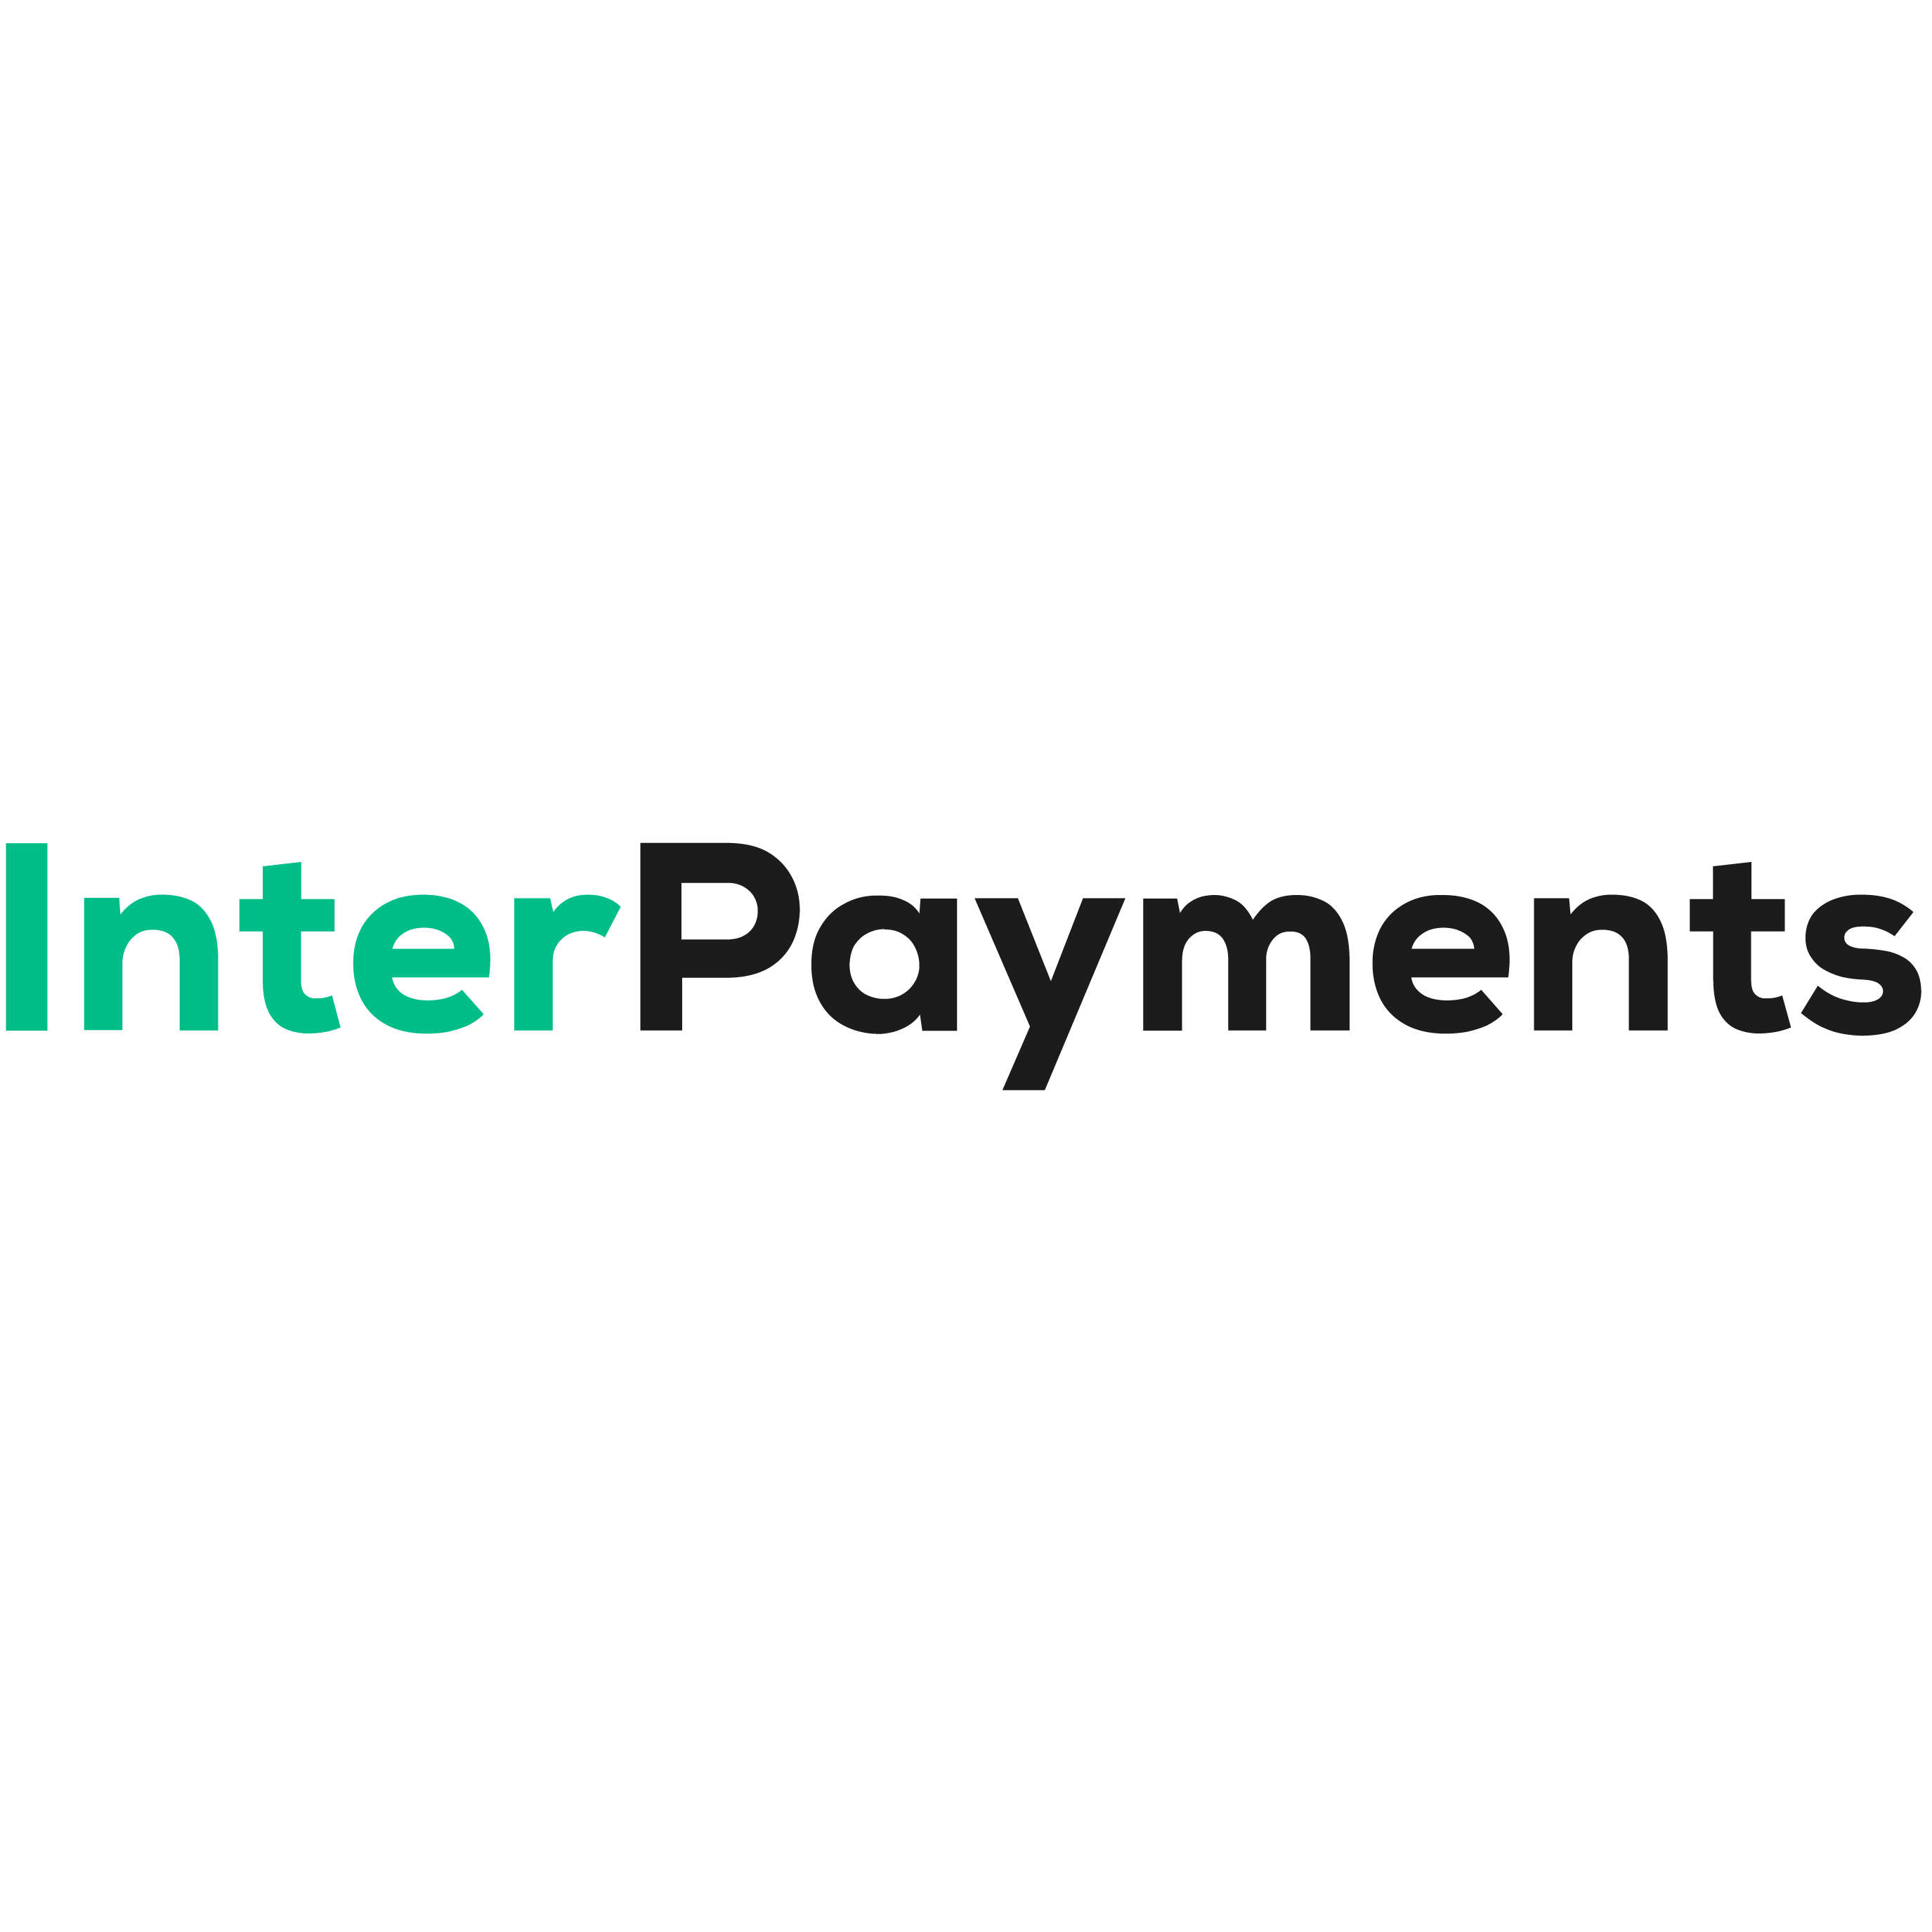 InterPayments Logo